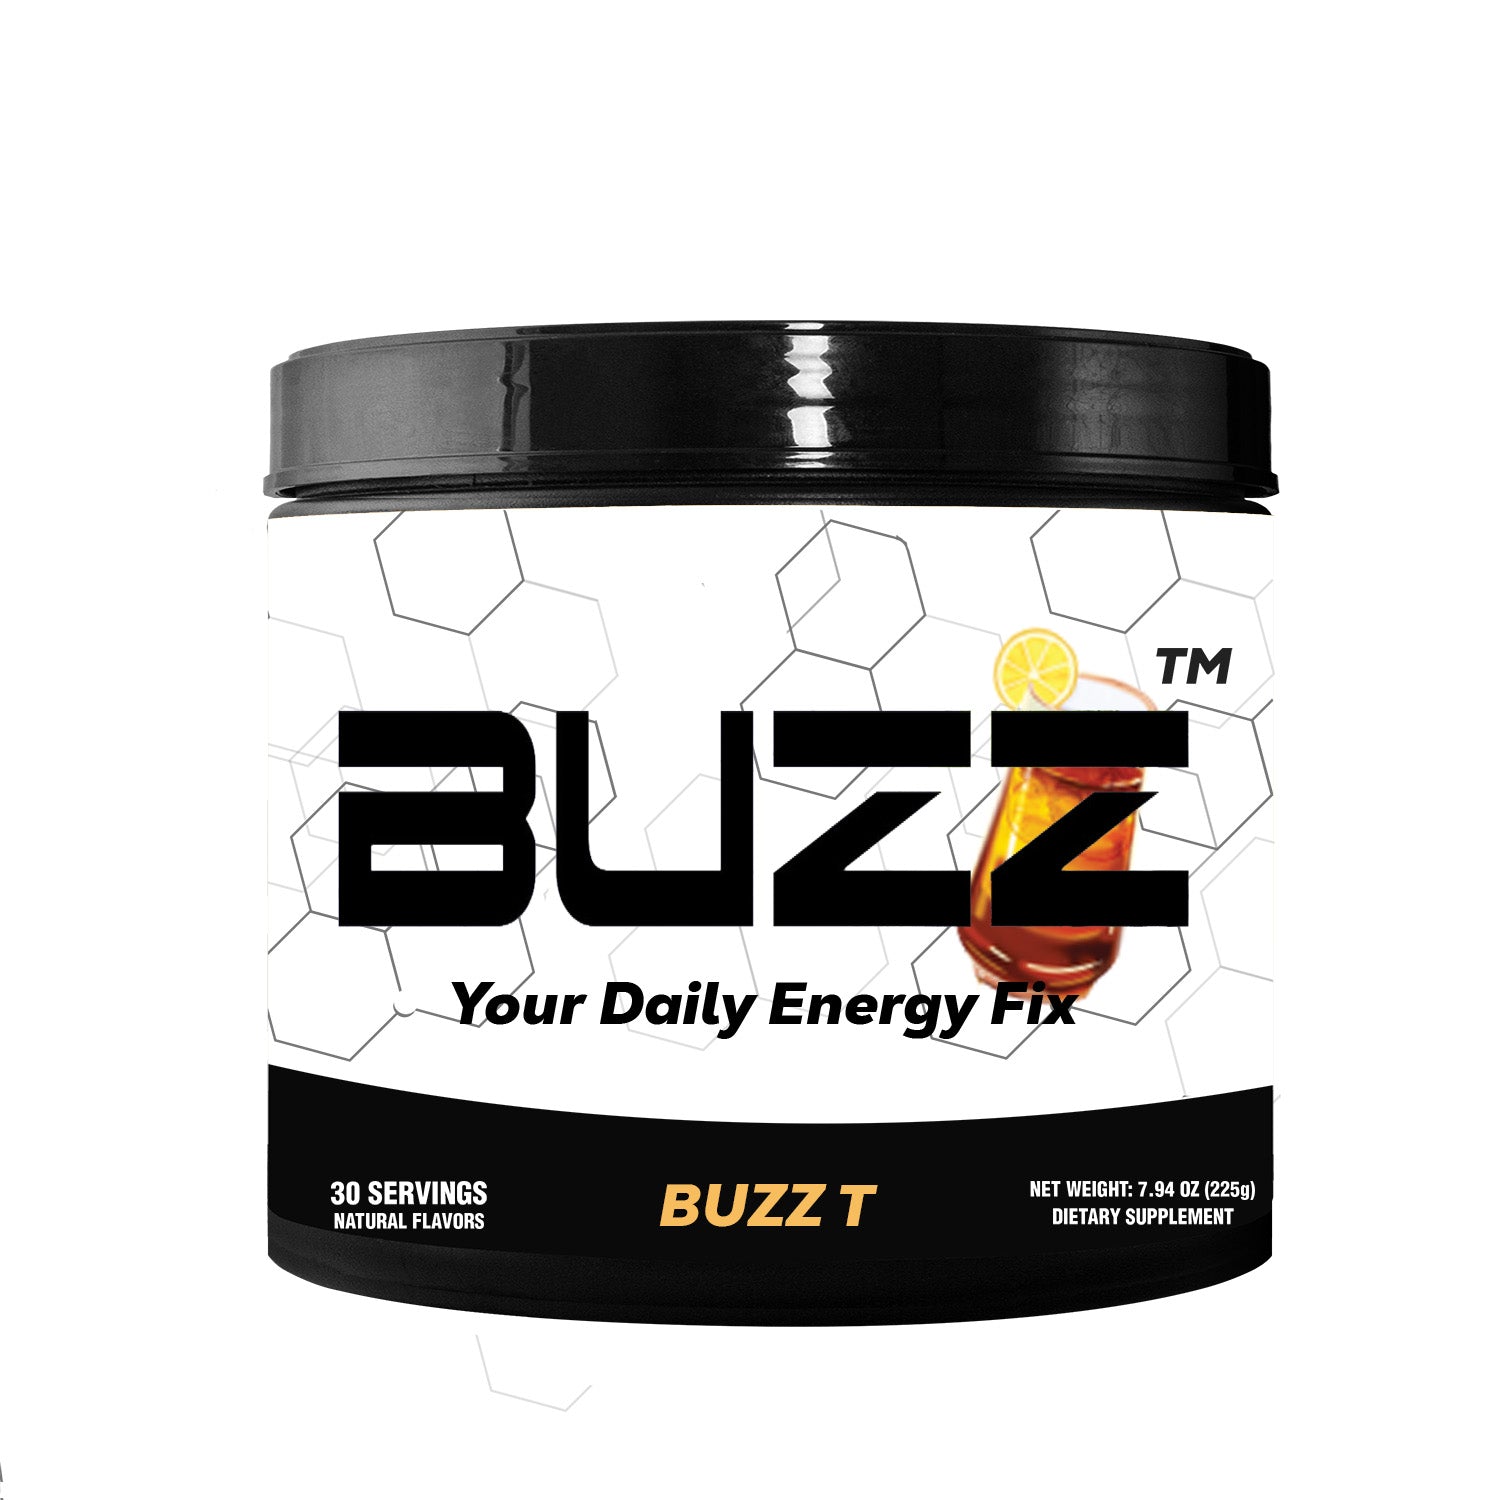 Morning Buzz Buzz T